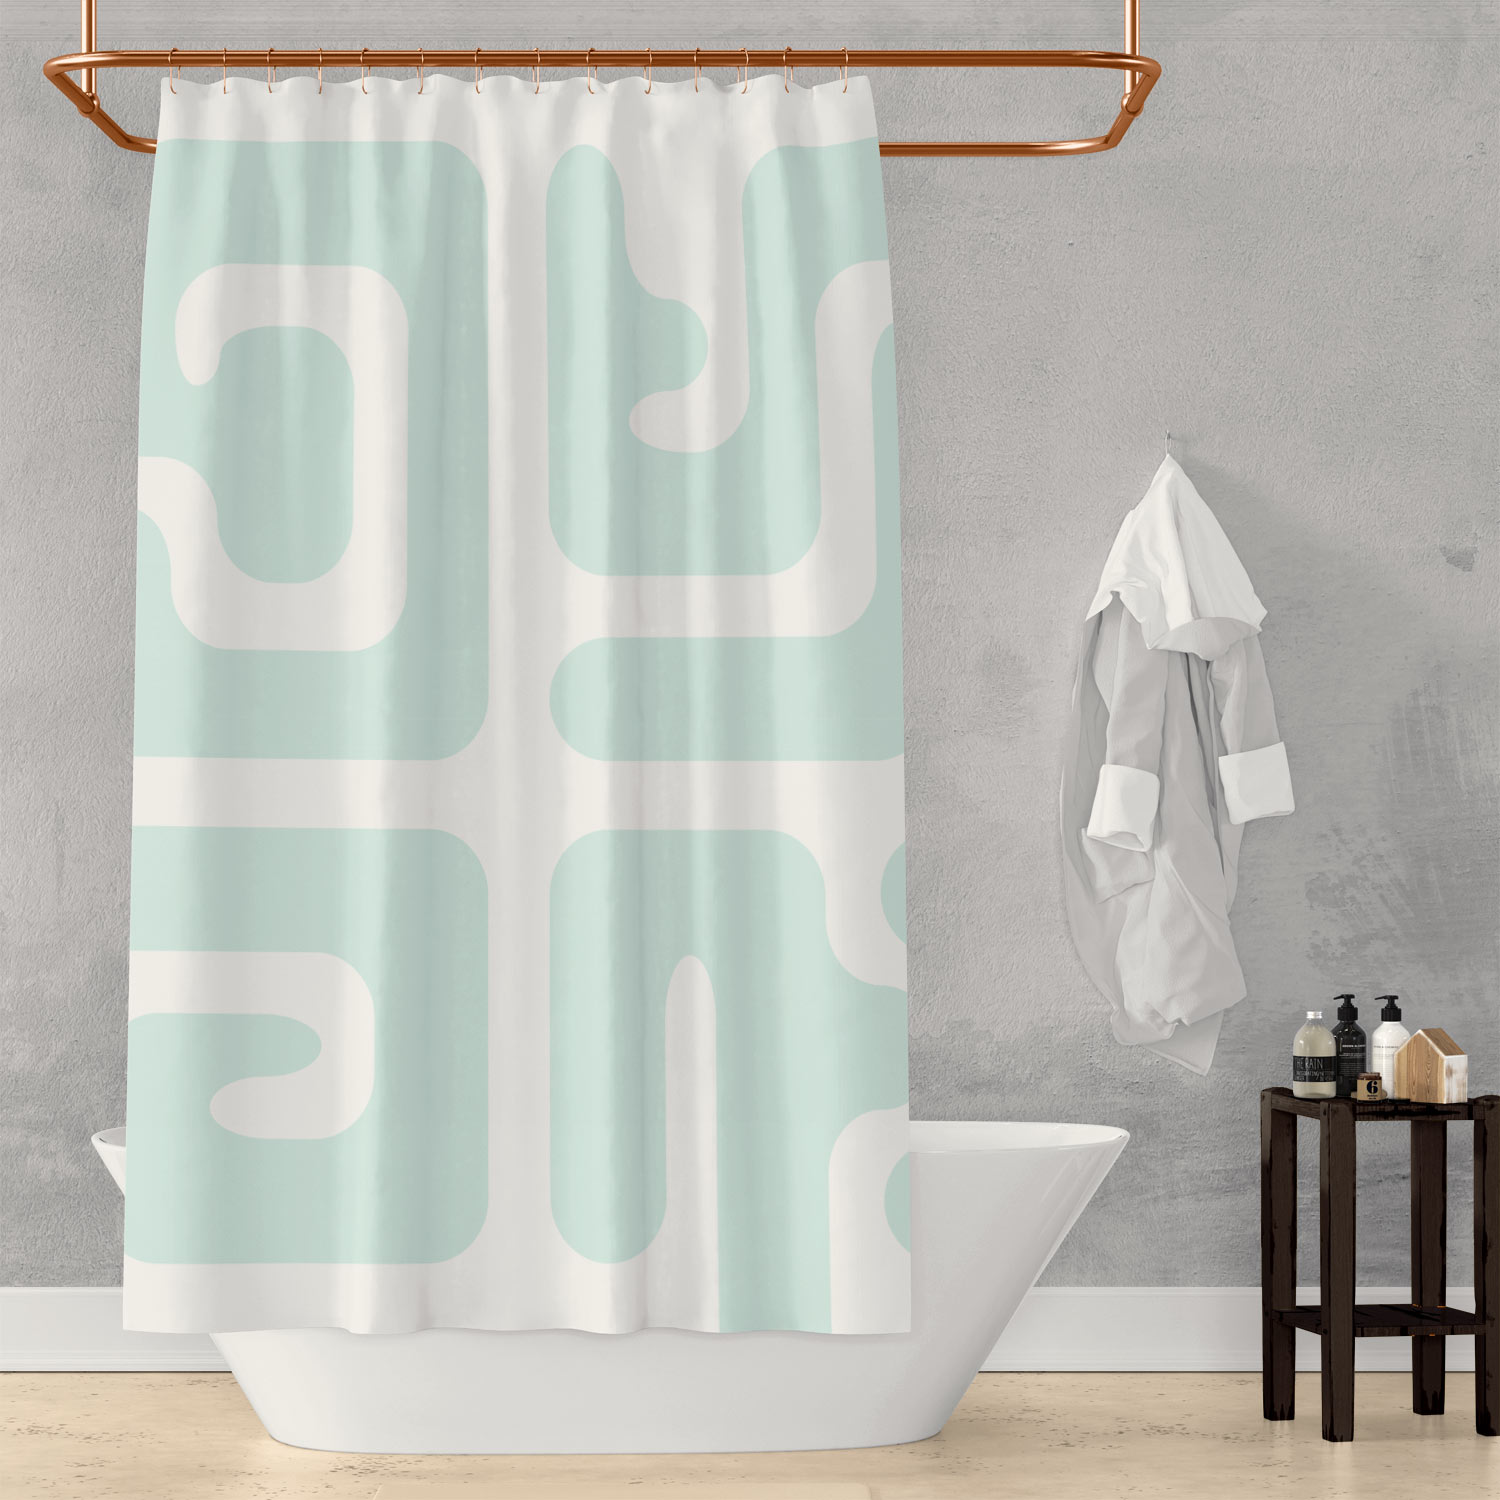 Aqua Waves – Kuba cloth inspired shower curtain